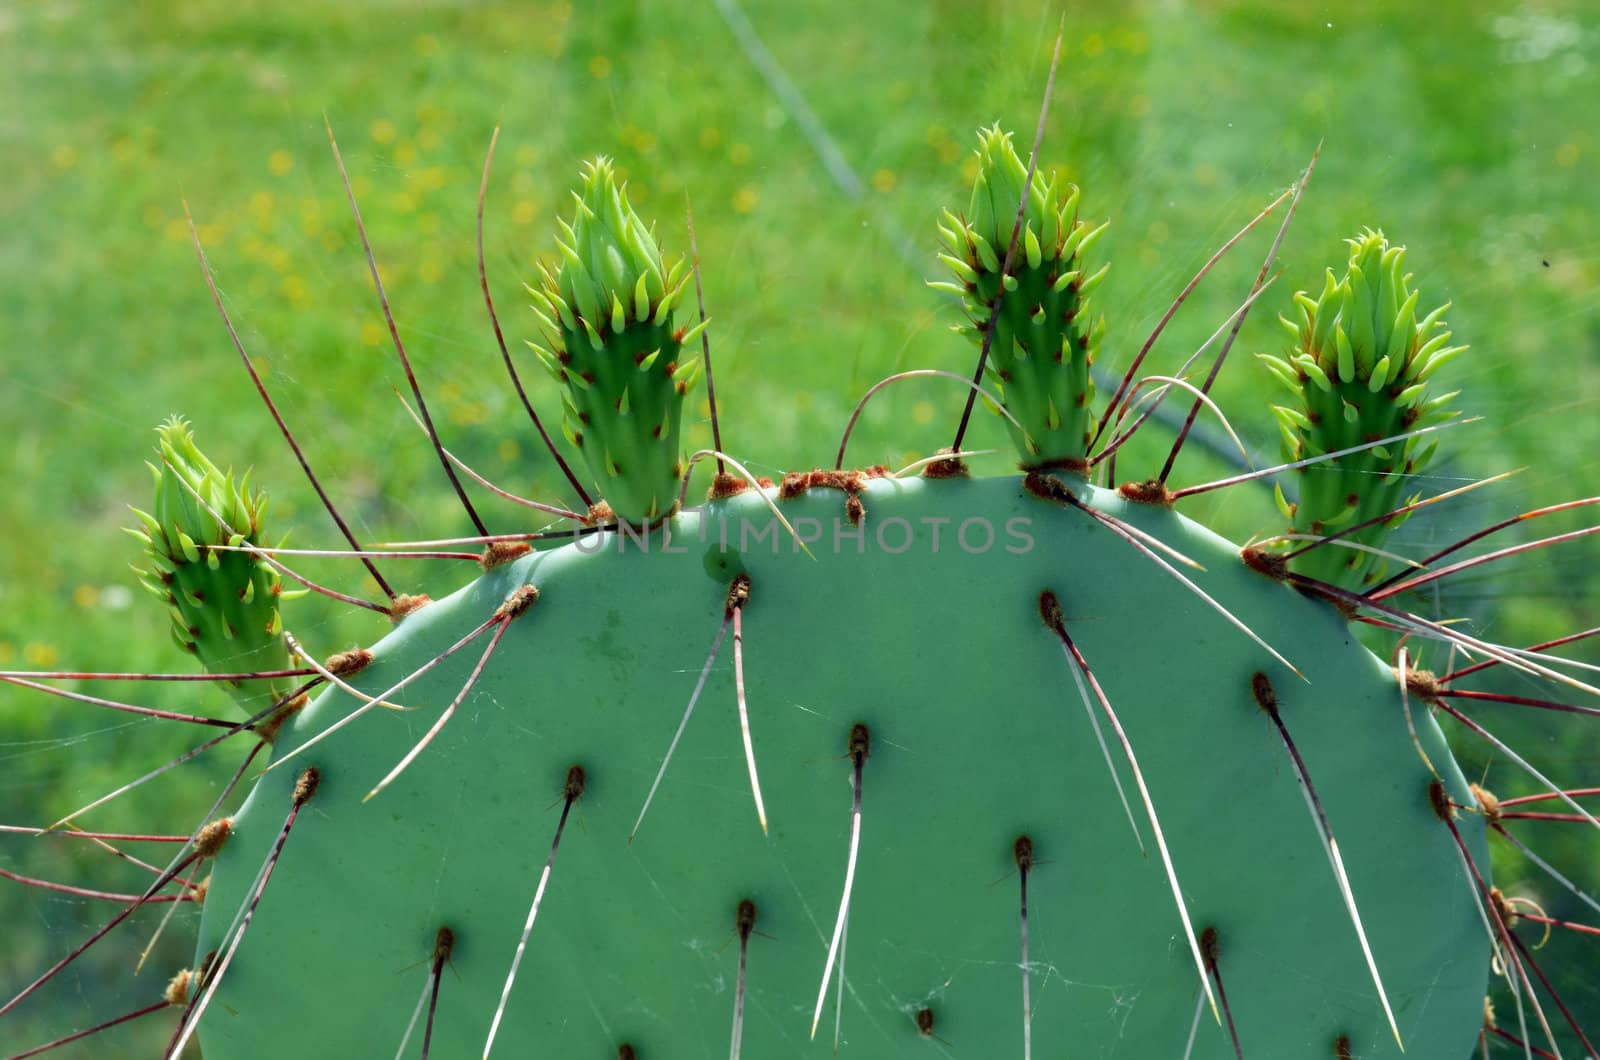 Prickly Pear cactus prepared for blooming by sauletas